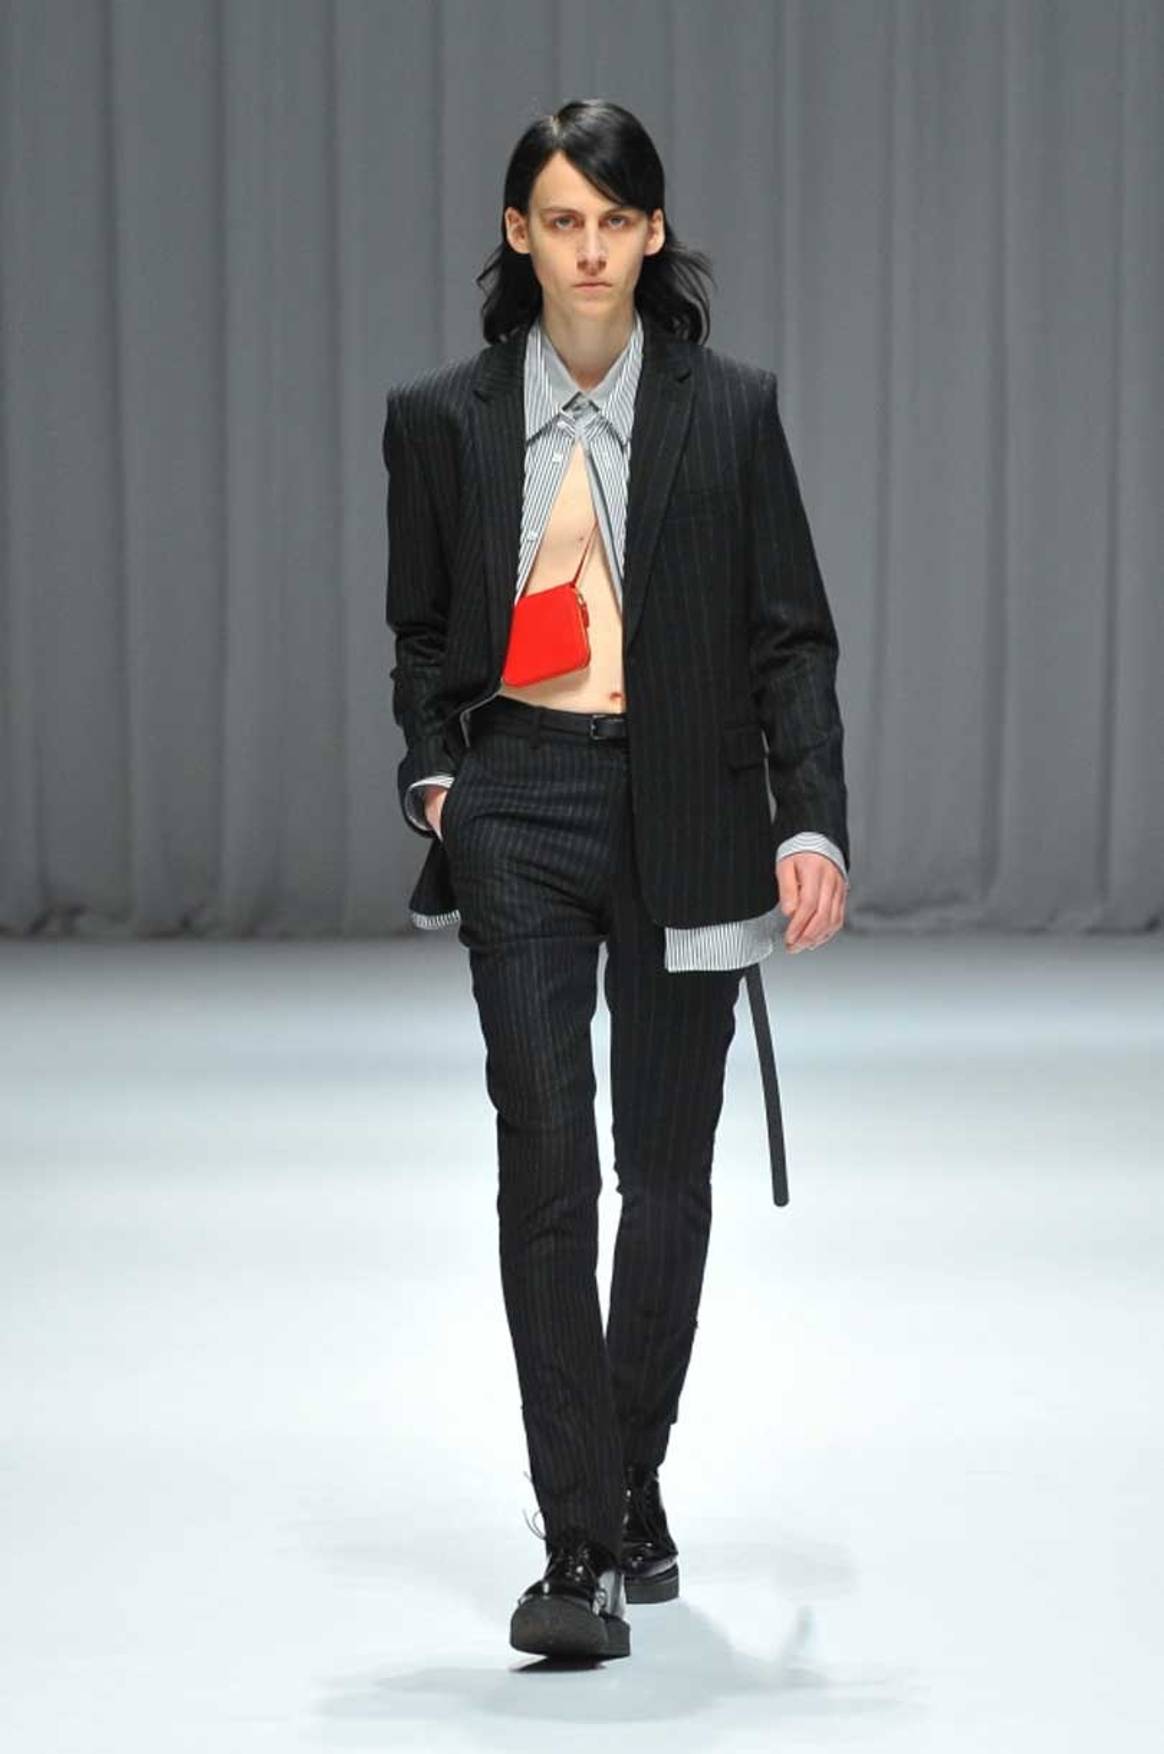 Gender-bending fashion spotted at Tokyo Fashion Week bang on trend